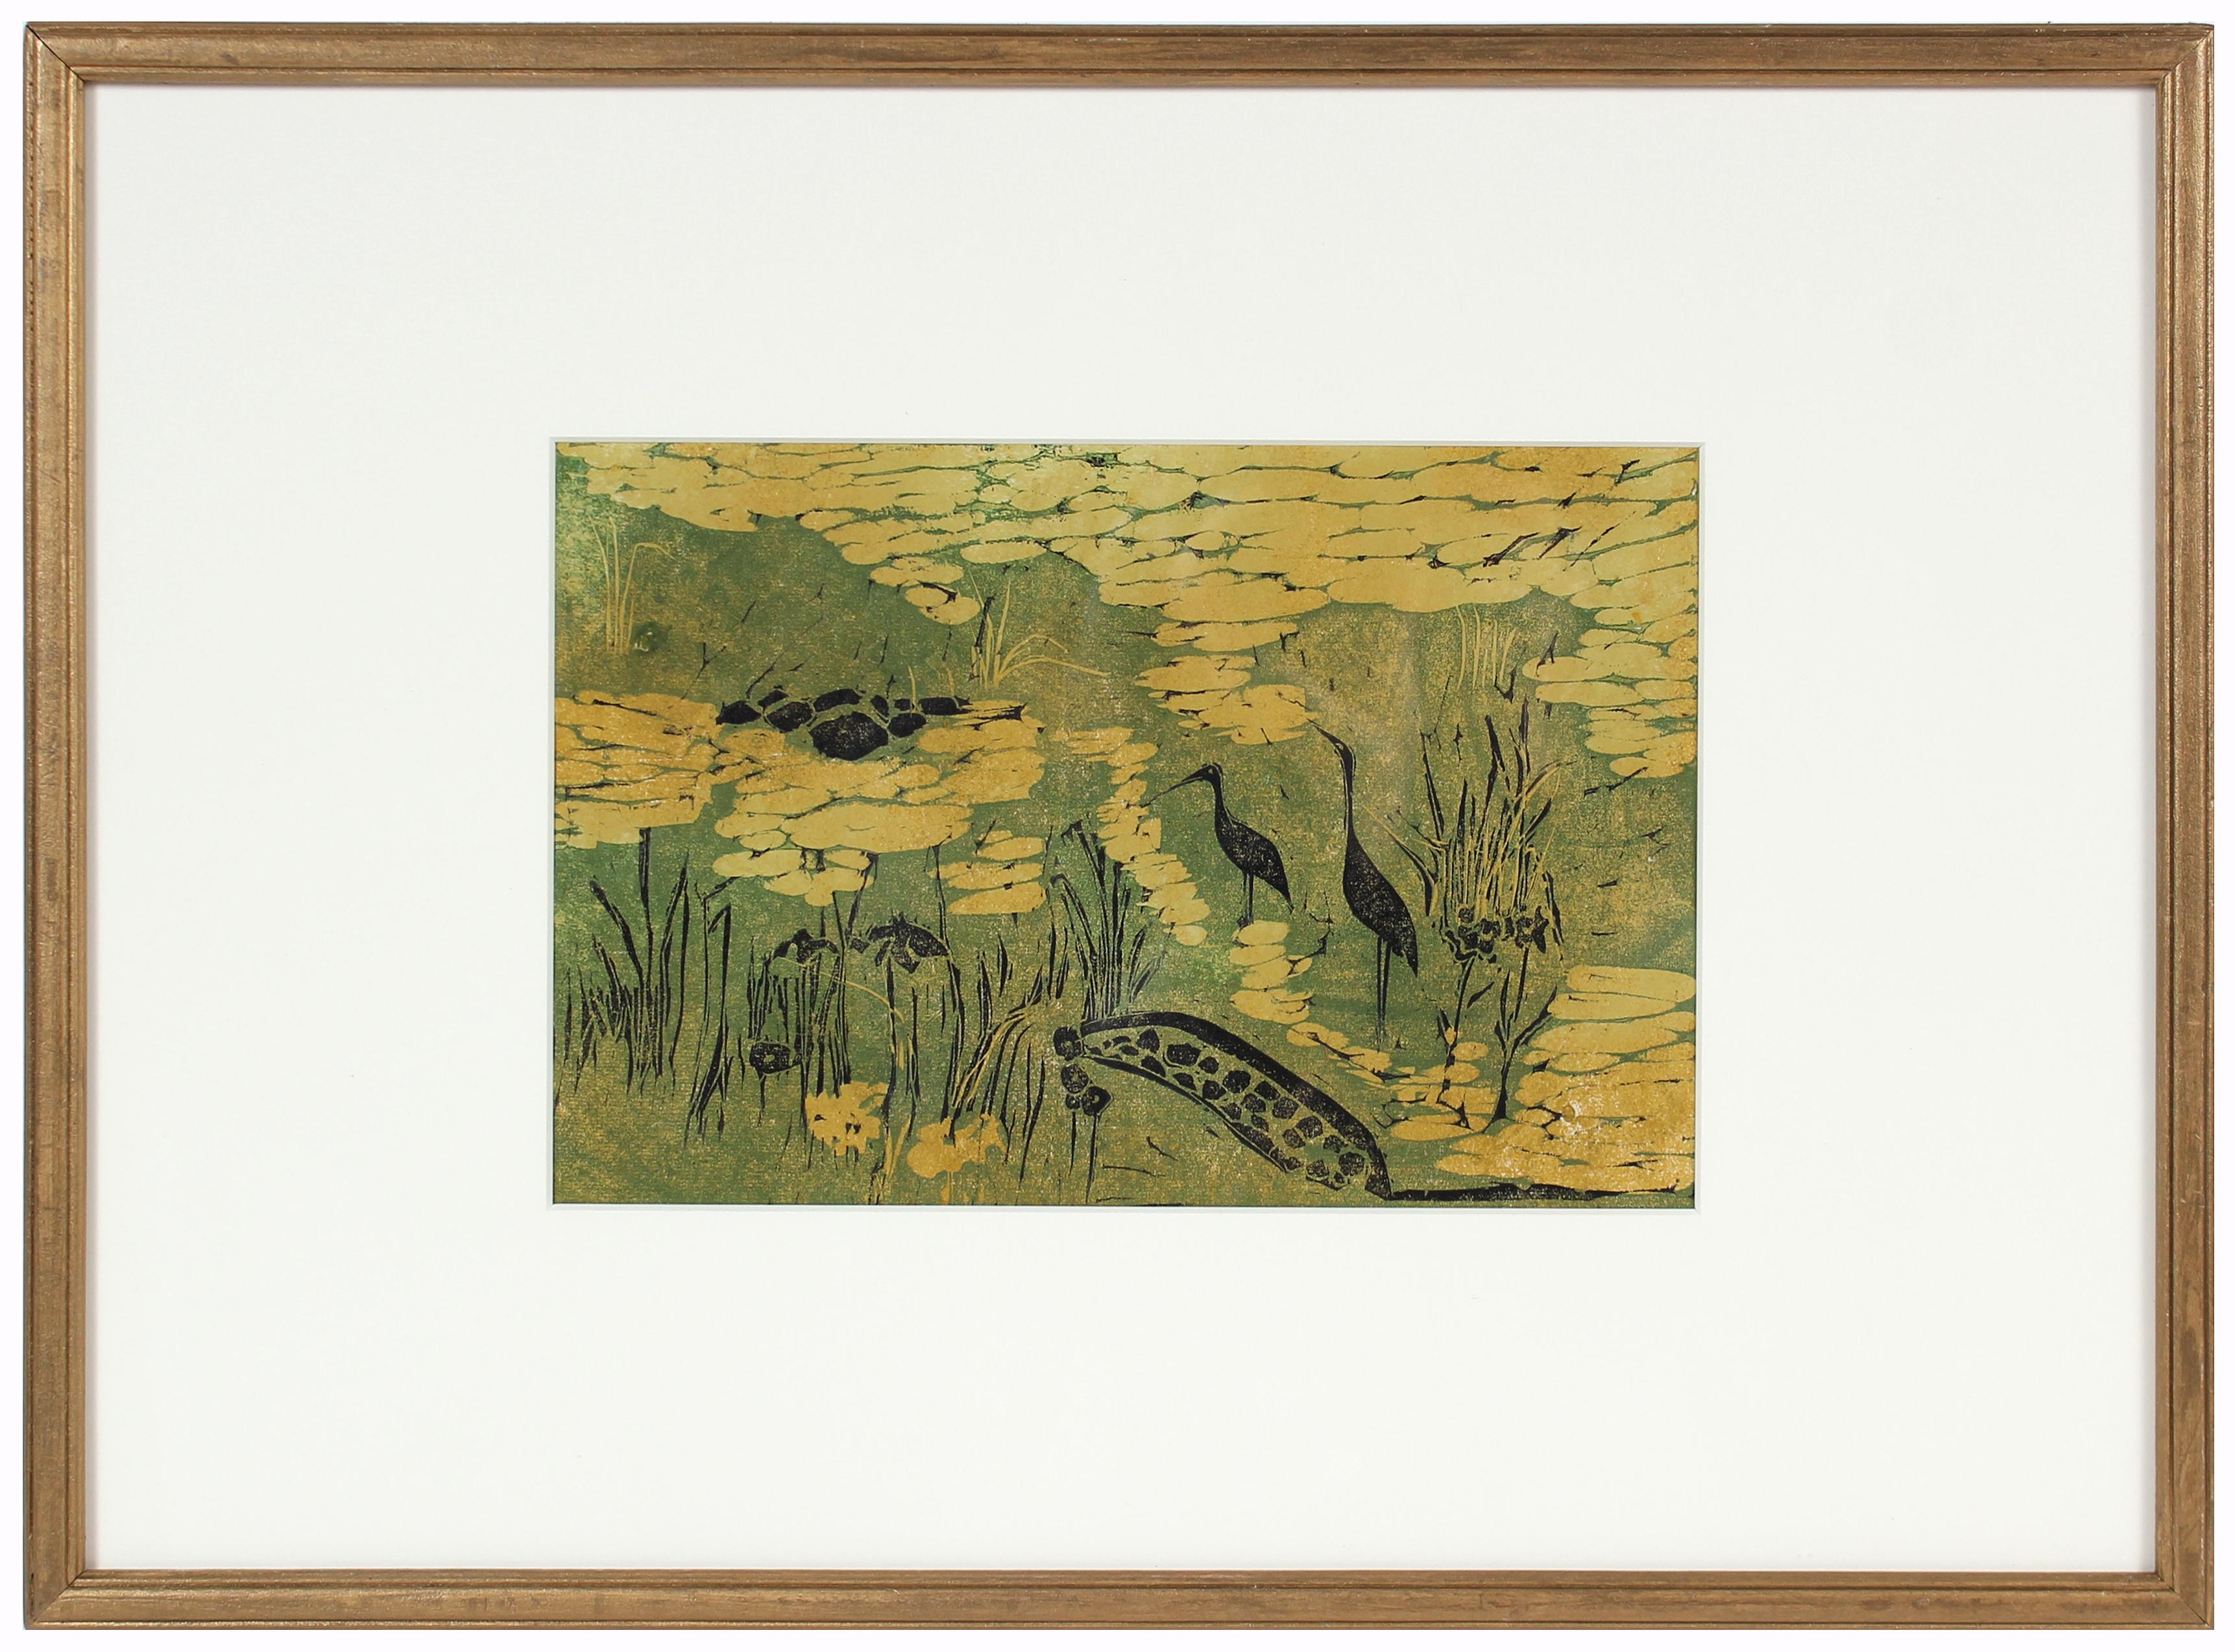 Carol Cunningham Animal Print - "Nelumbo" Marsh Landscape with Birds, Linocut Print on Paper, Circa 1960s